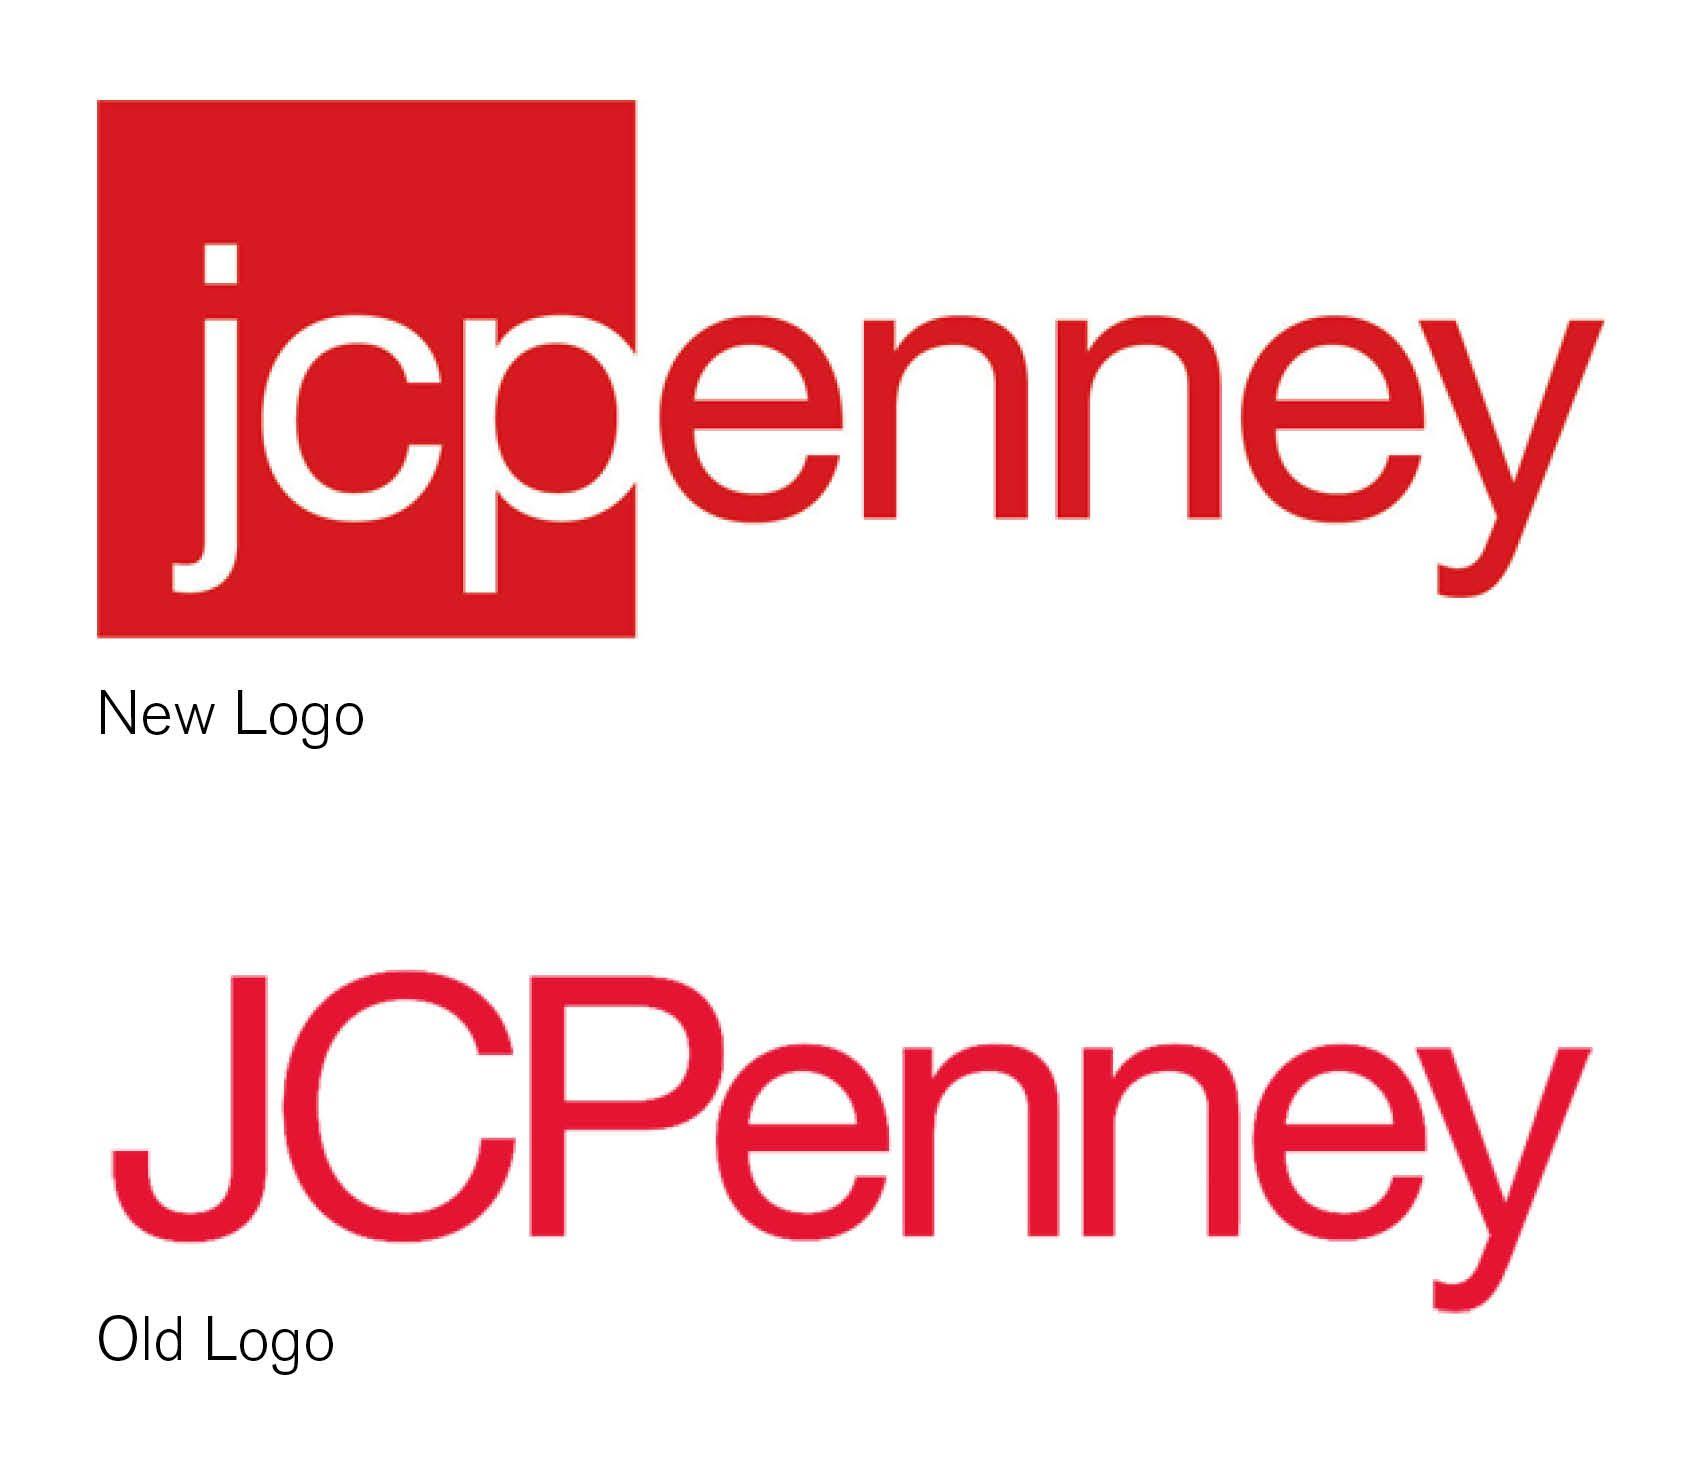 Jcpenney.com Logo - Jcpenney Logos